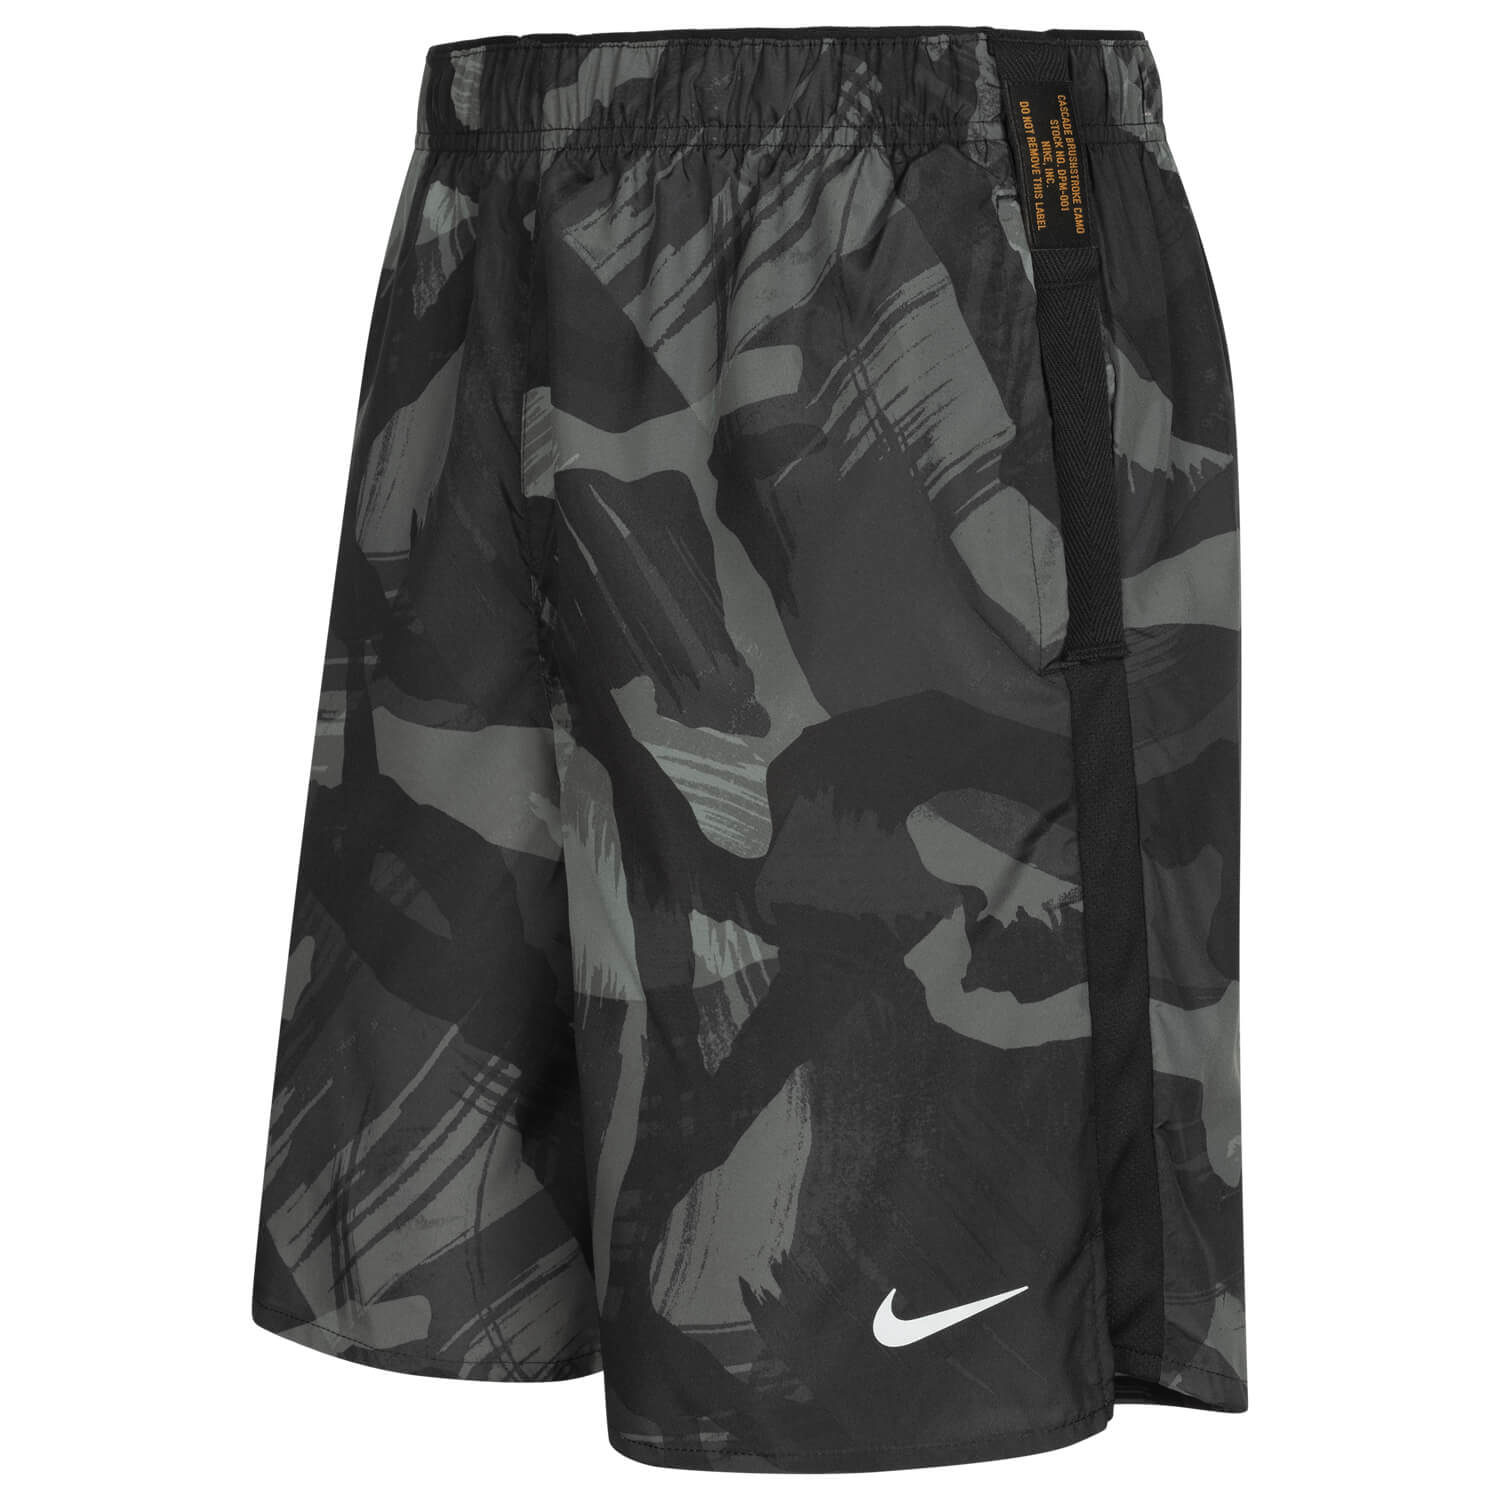 Bild 3: Nike Fitness-Shorts Camou